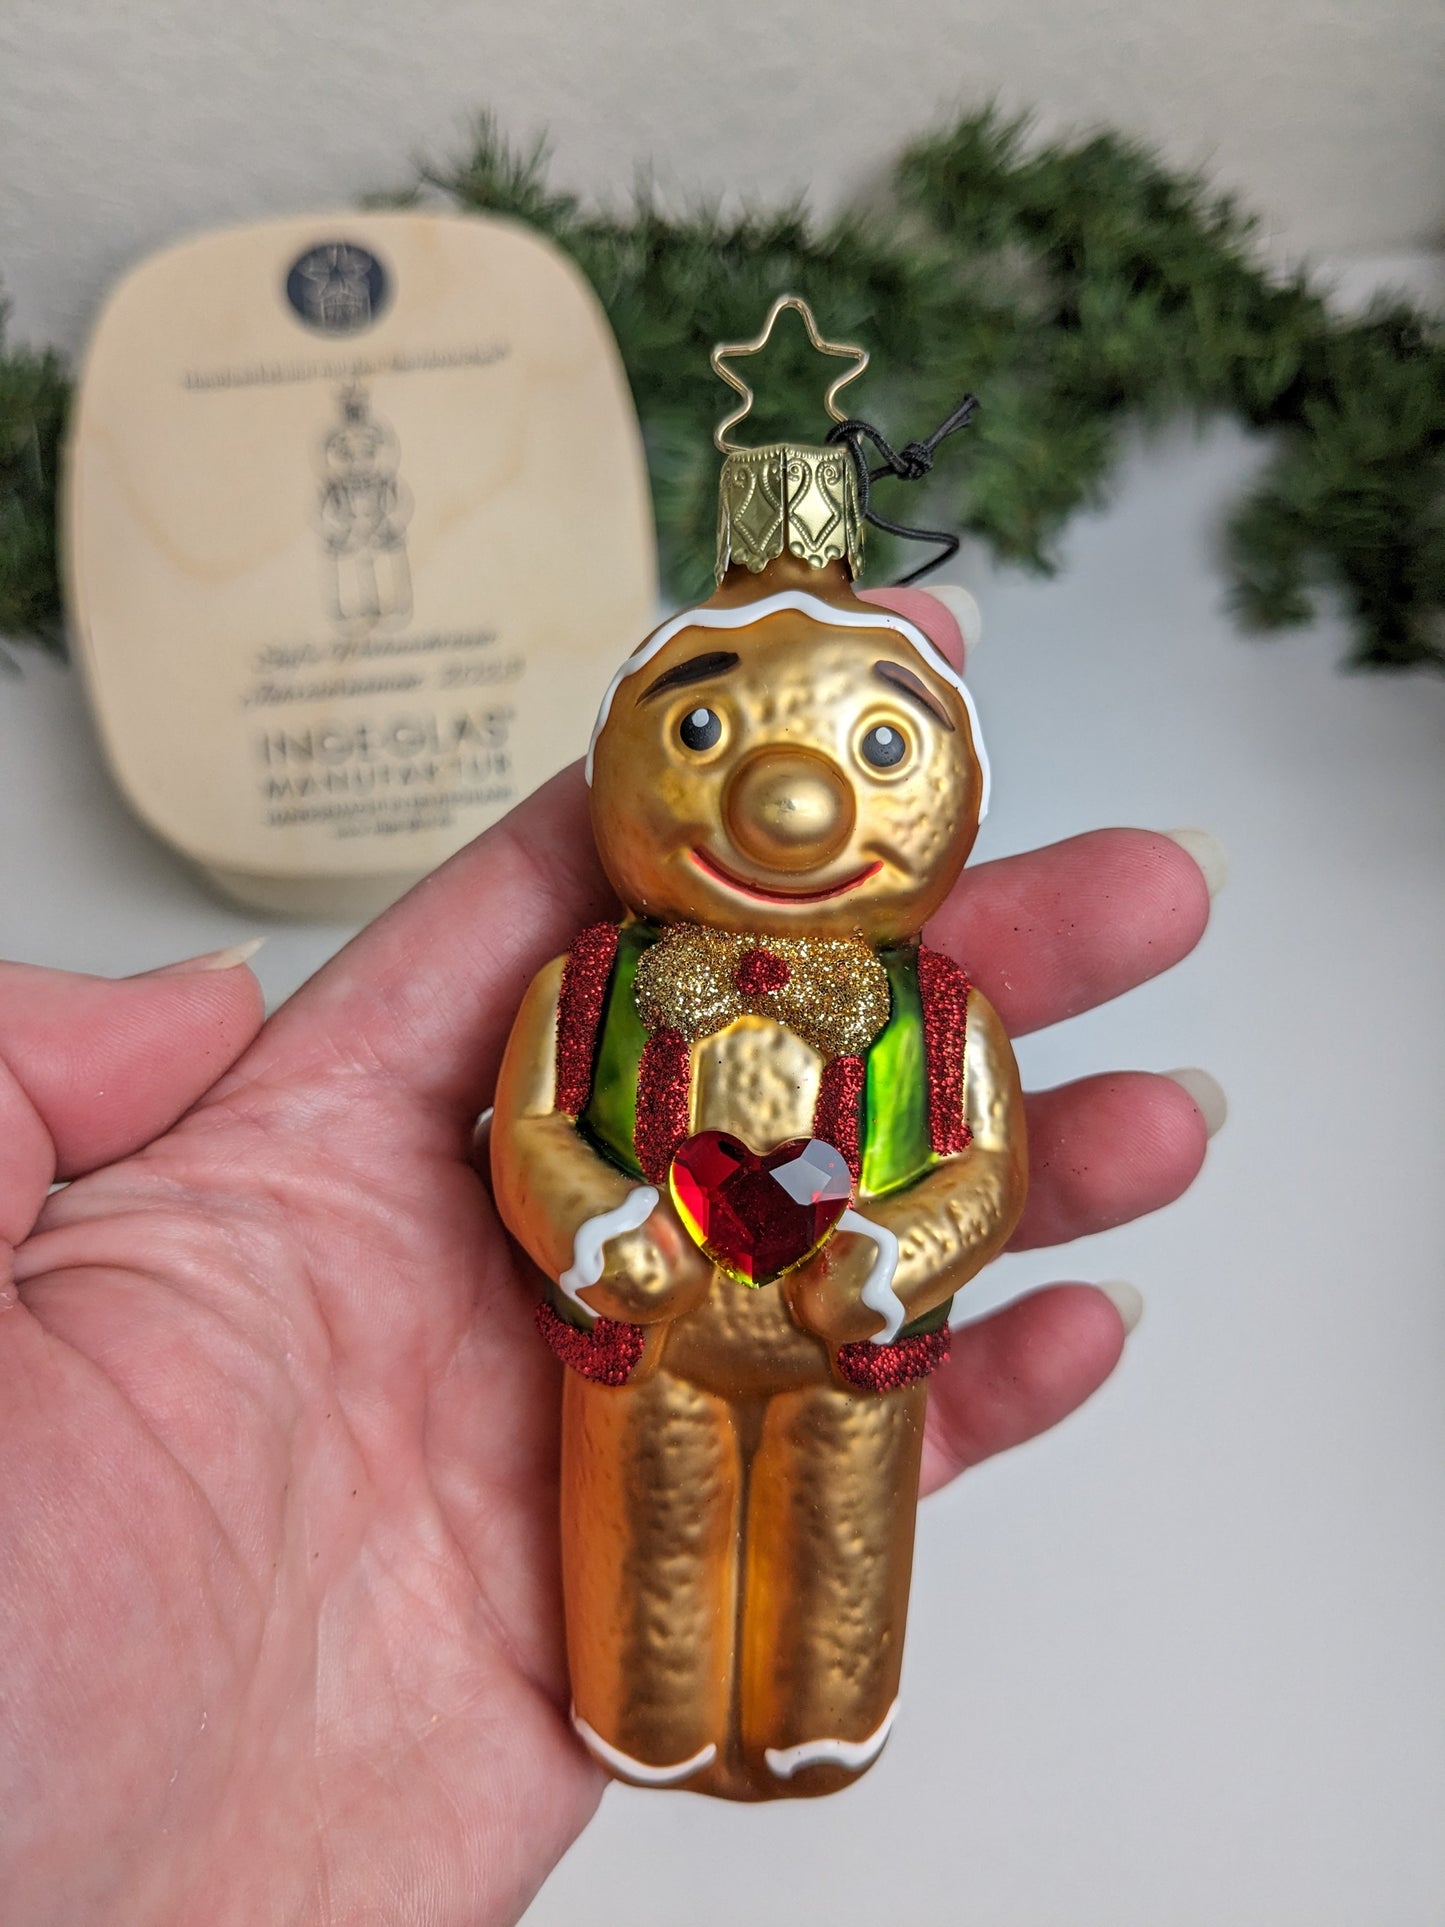 NEW 'Sweet Christmas' Gingerbread Man Inge Glas Christmas Ornament